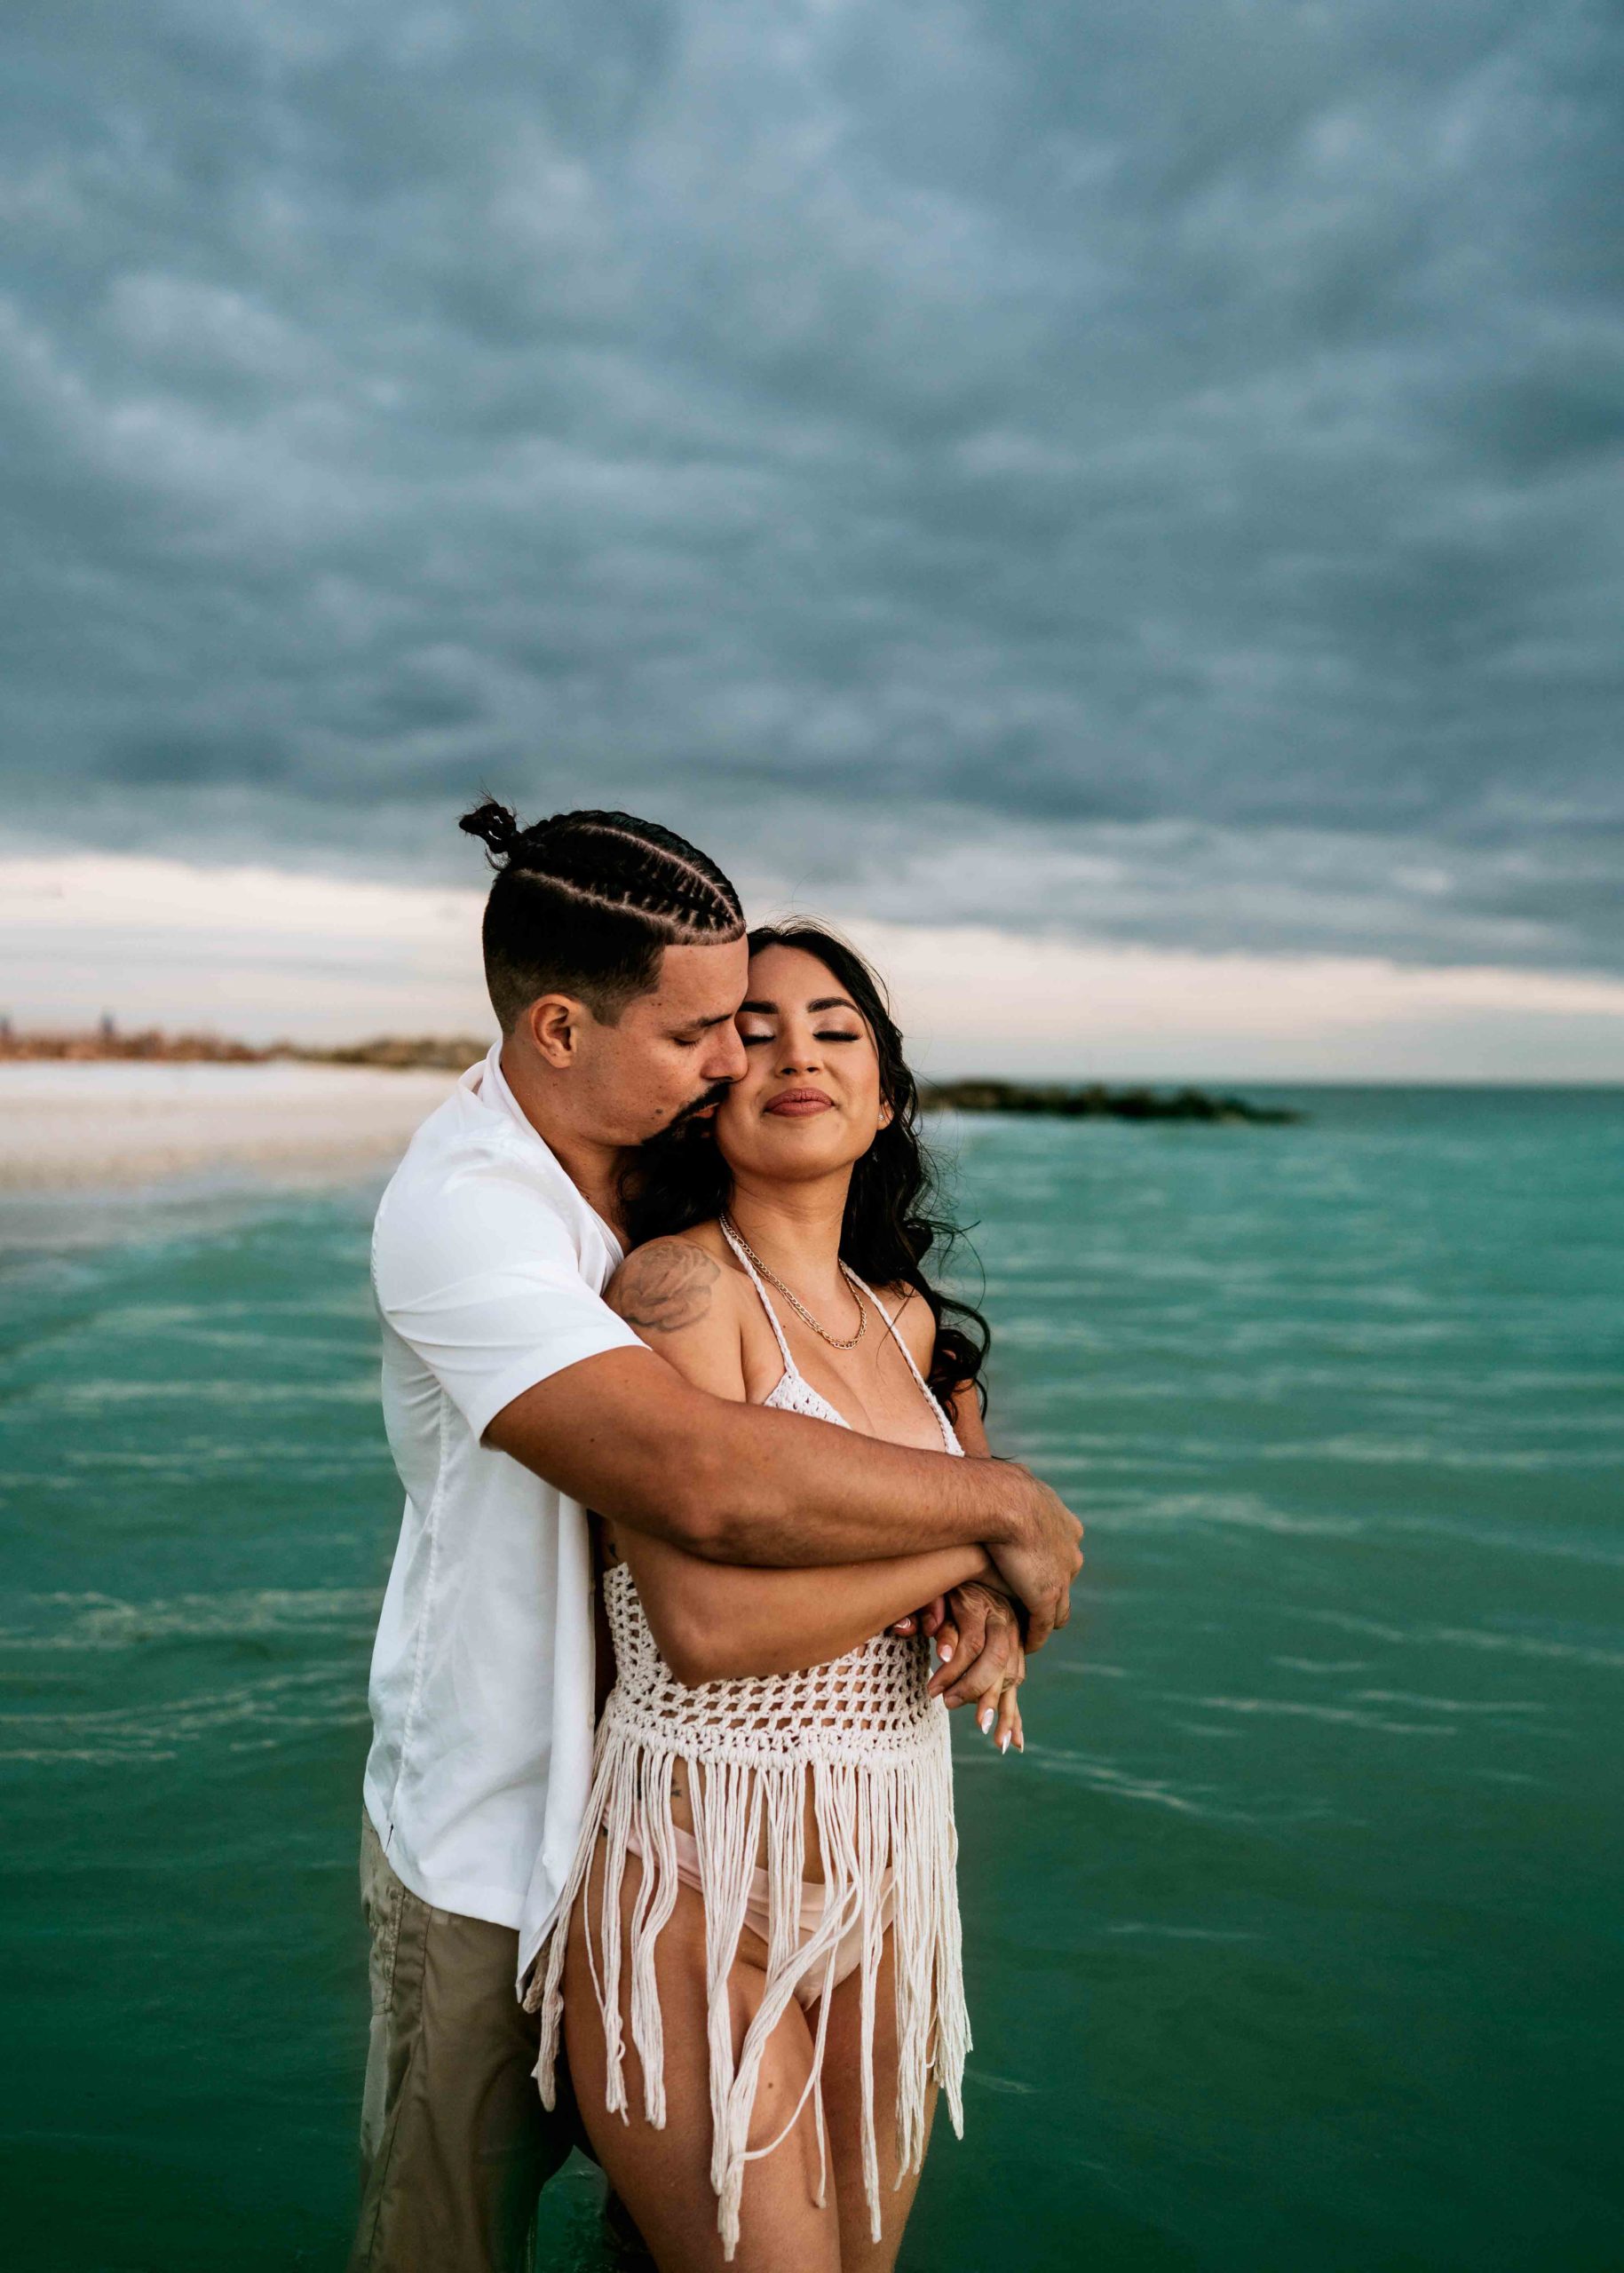 Couple-hugging-ocean-Photoshoot-miami